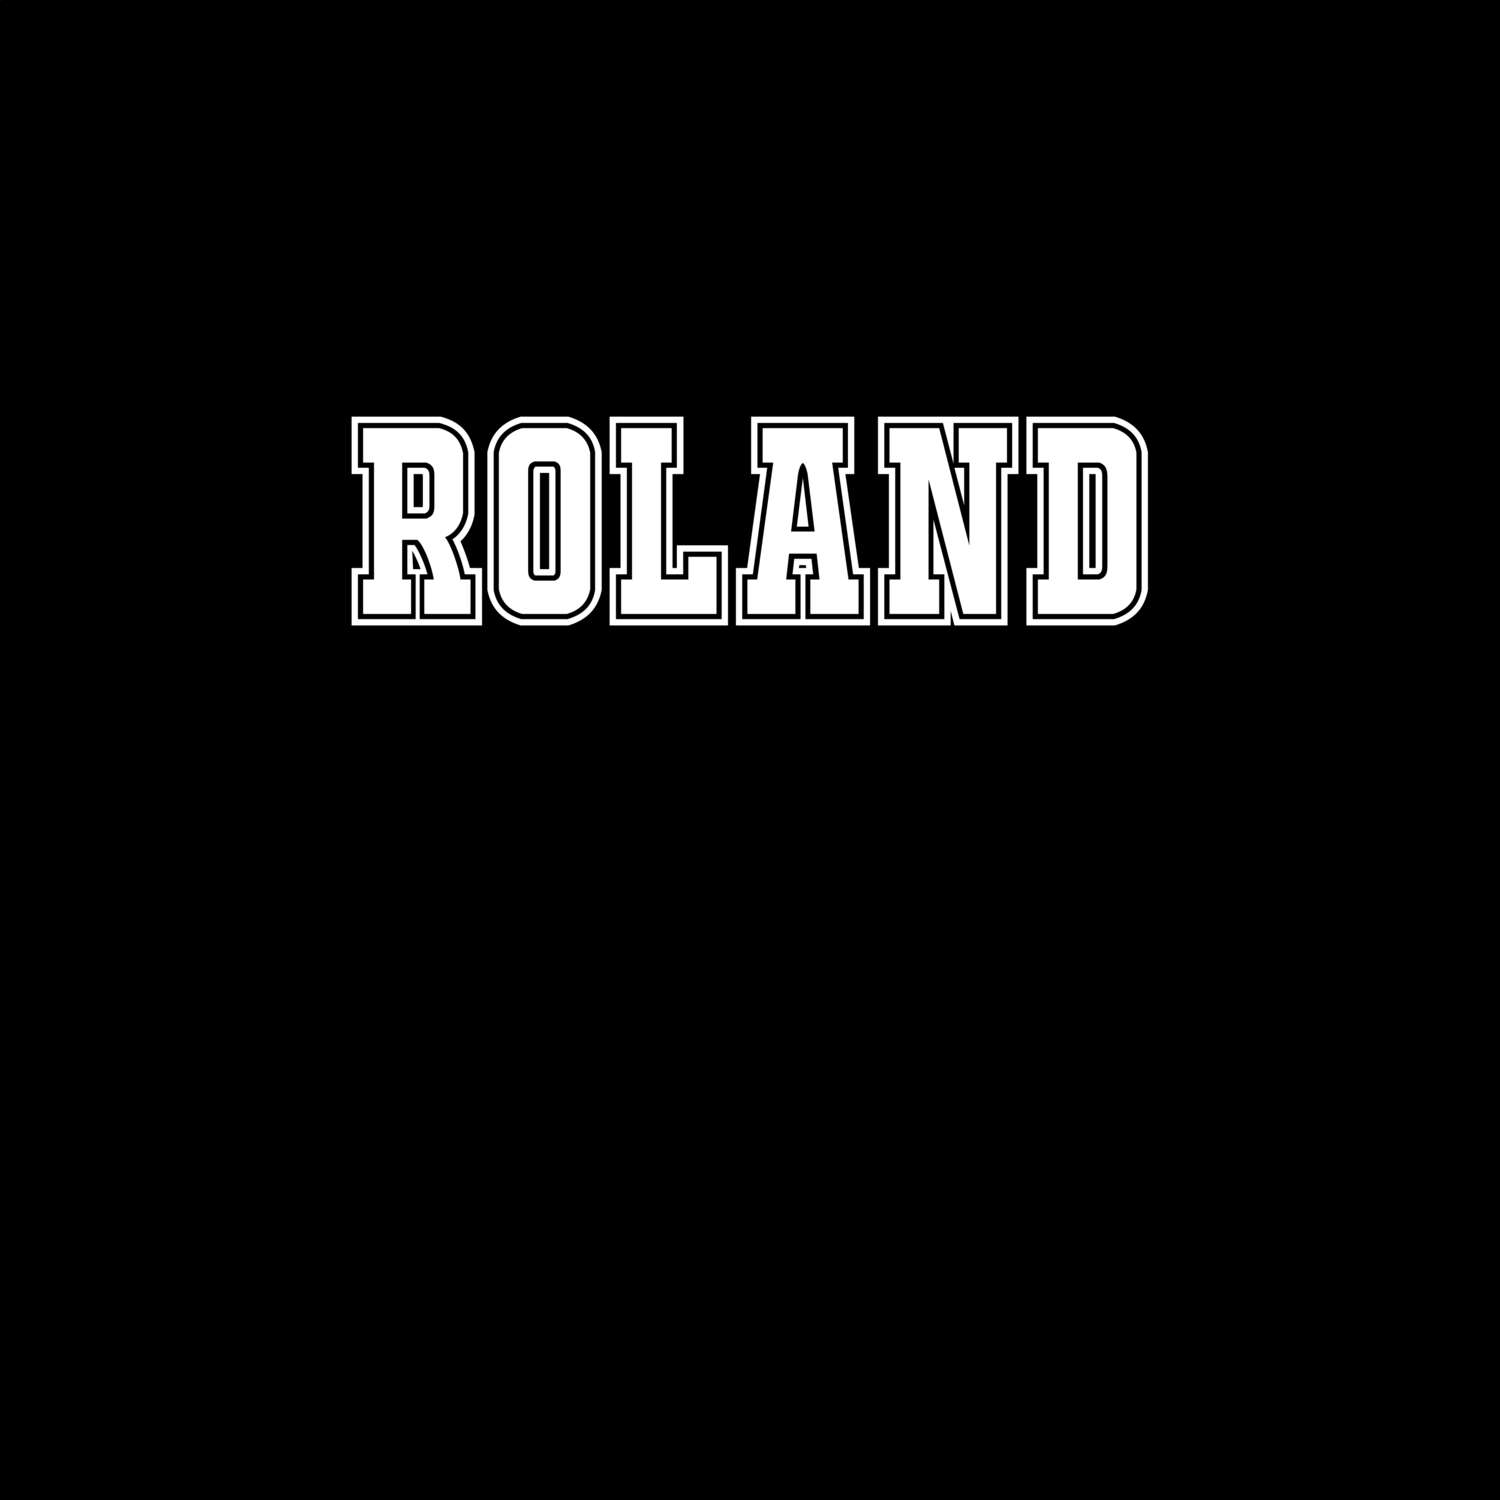 Roland T-Shirt »Classic«